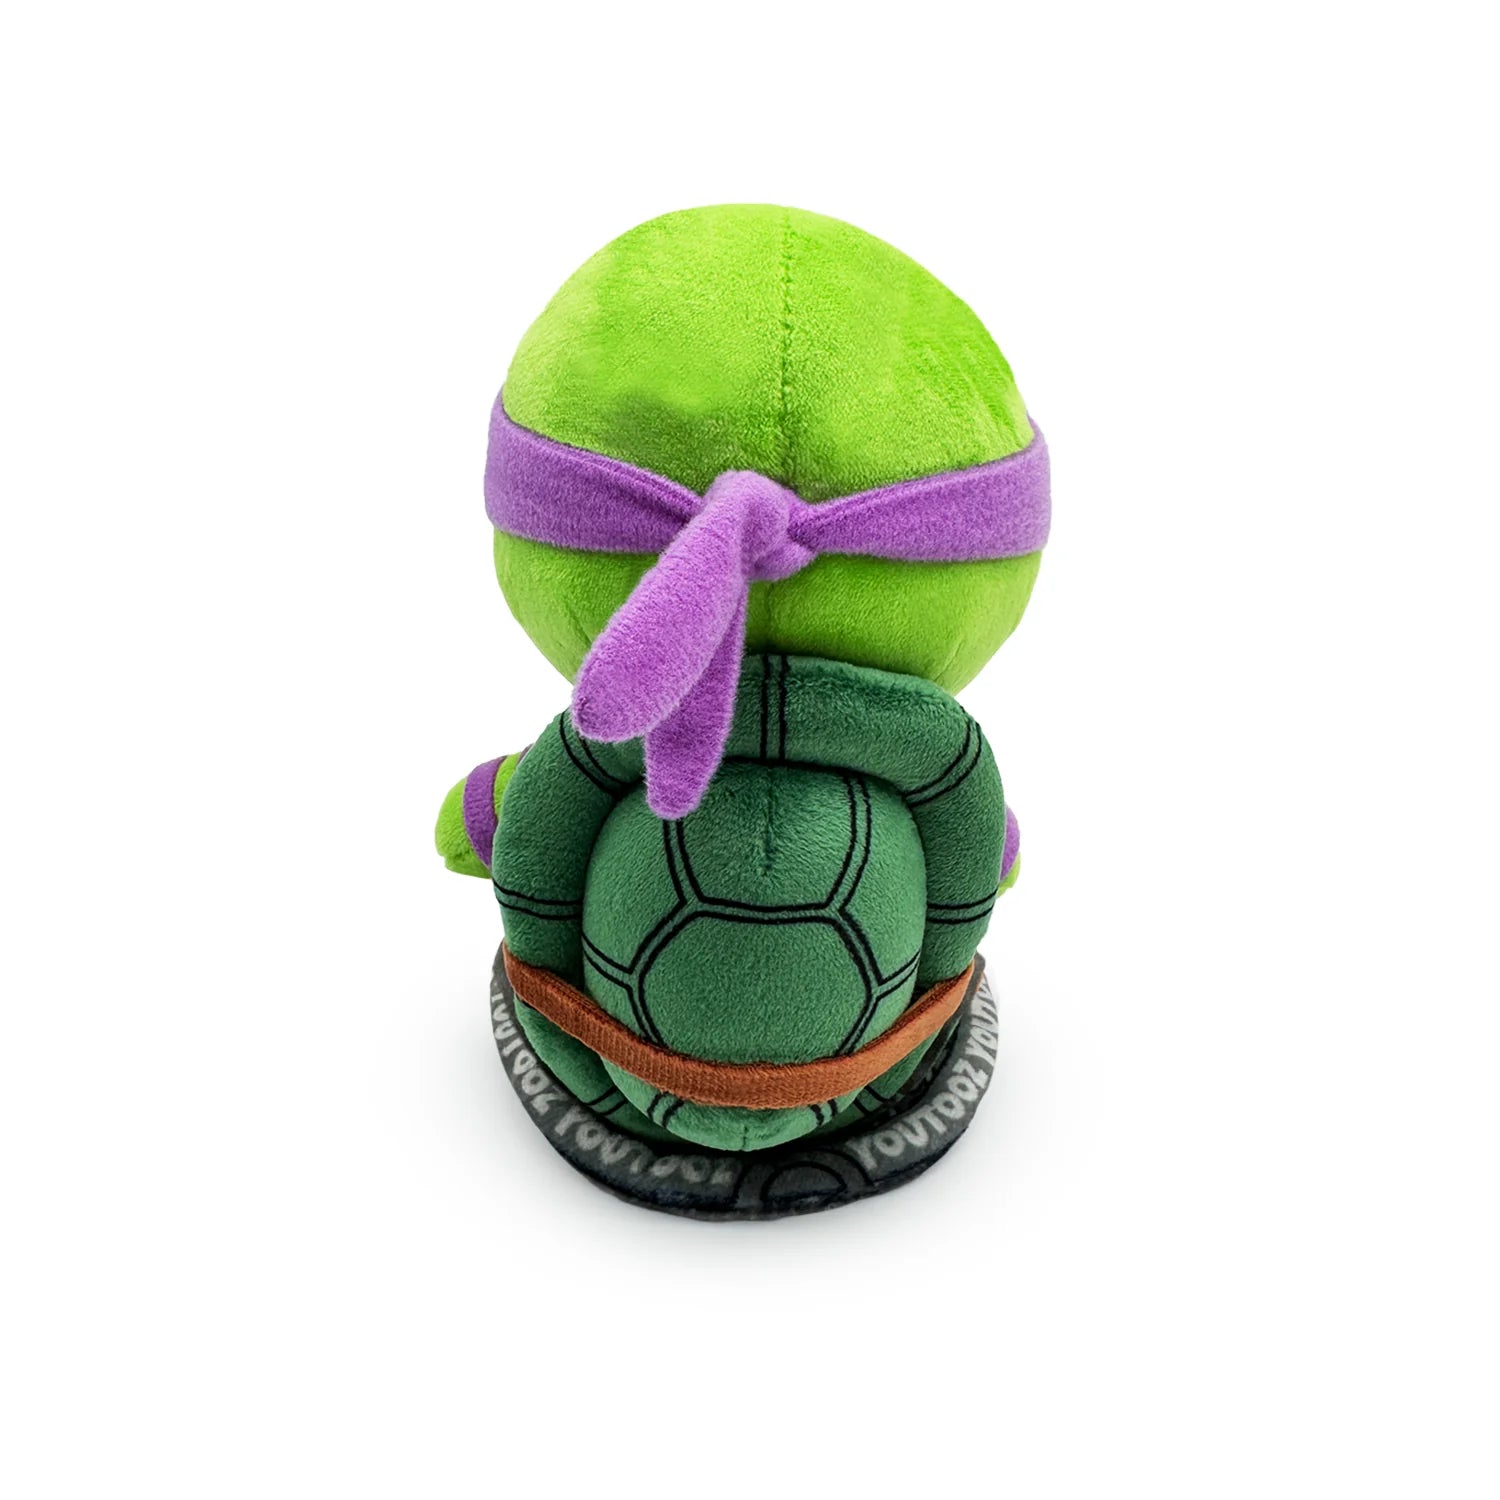 Youtooz Plush Shoulder Rider: TMNT Tortugas Ninja - Donatello Peluche 6 Pulgadas